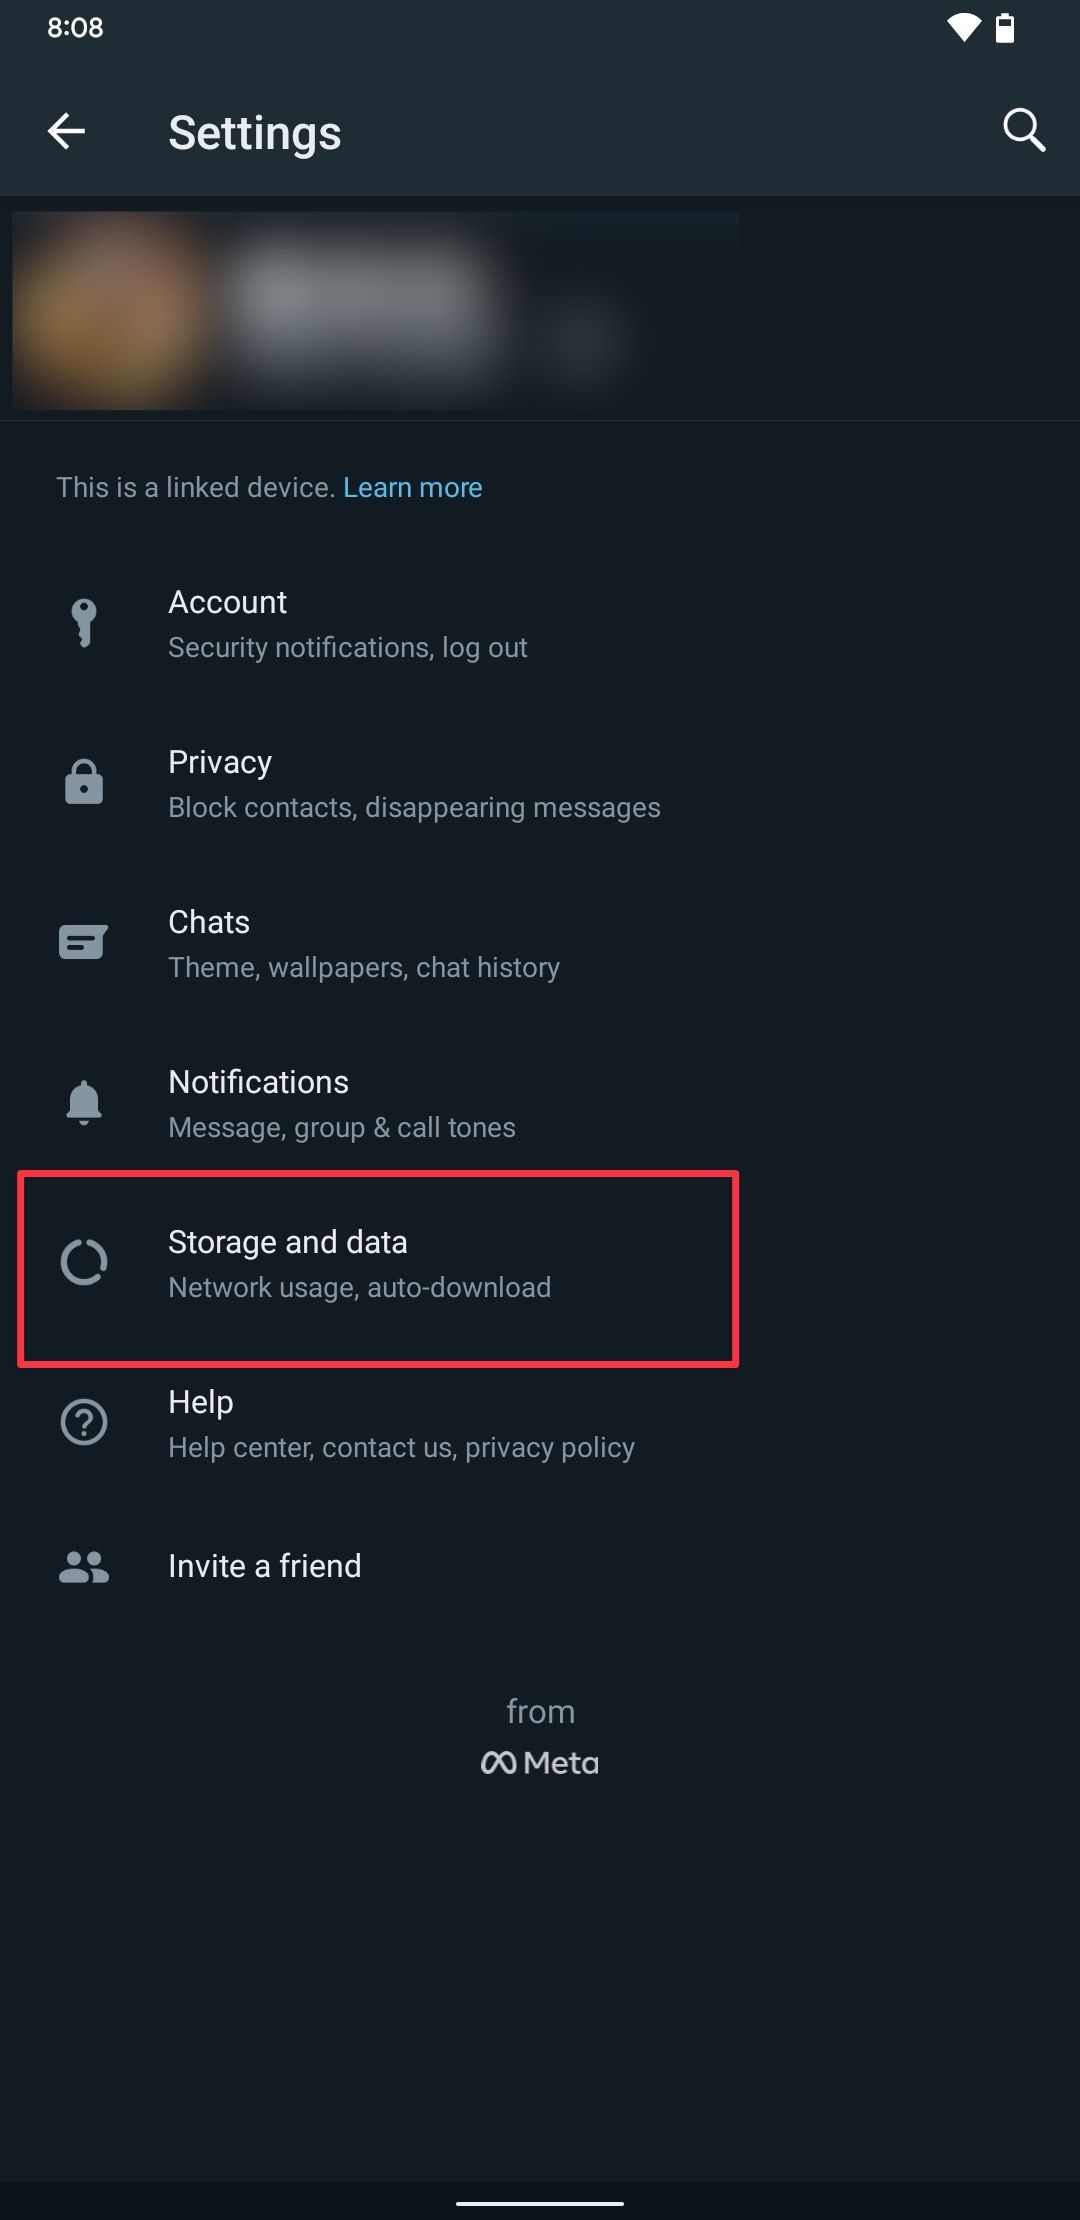 WhatsApp Settings screen screenshot showing Storage and data option